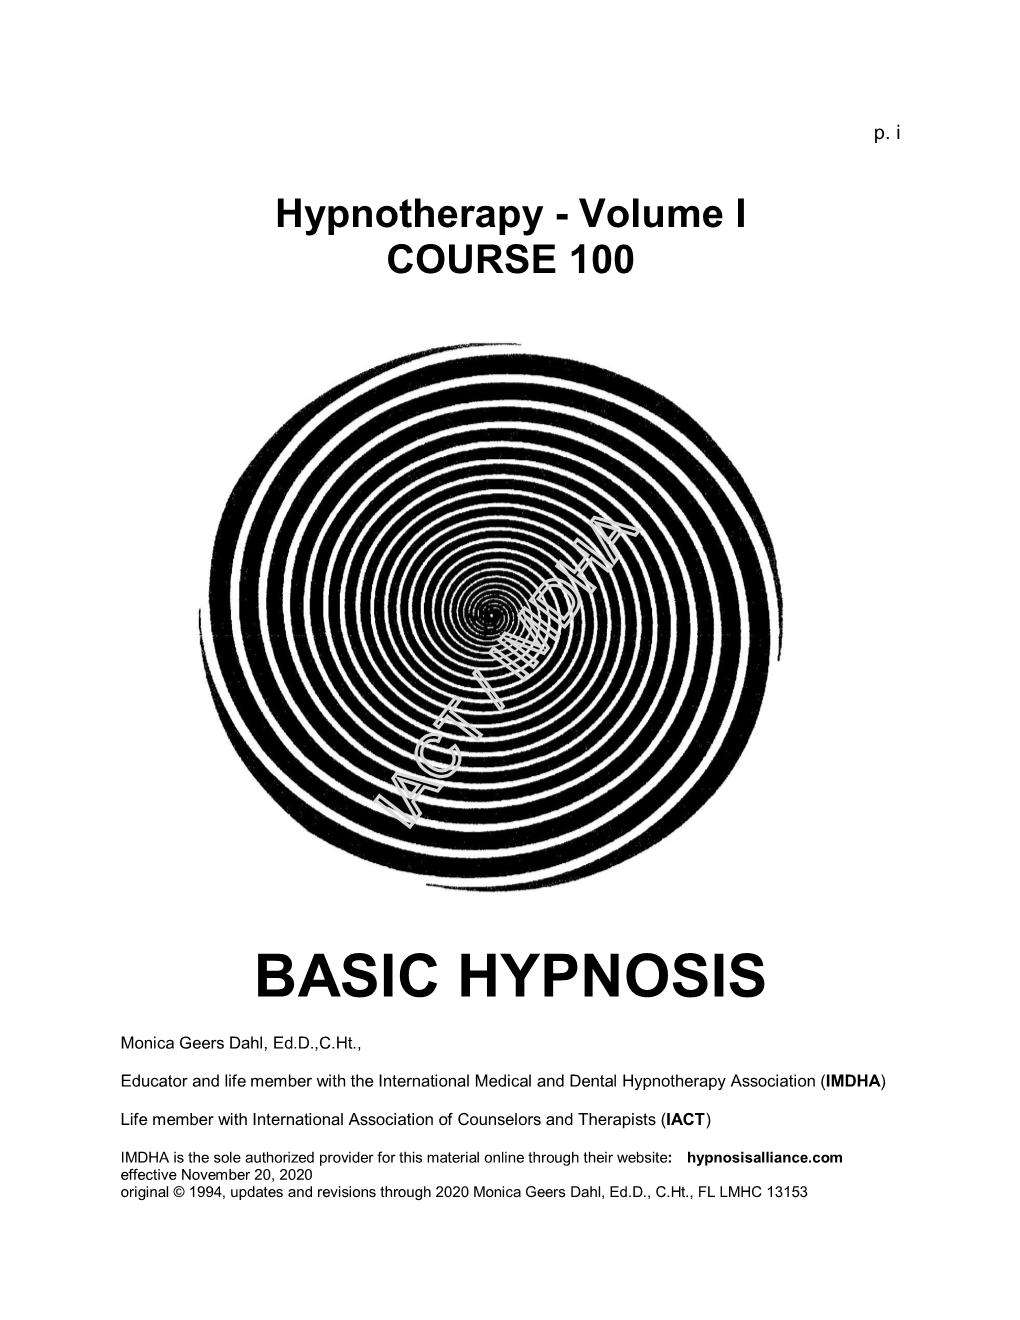 Basic Hypnosis